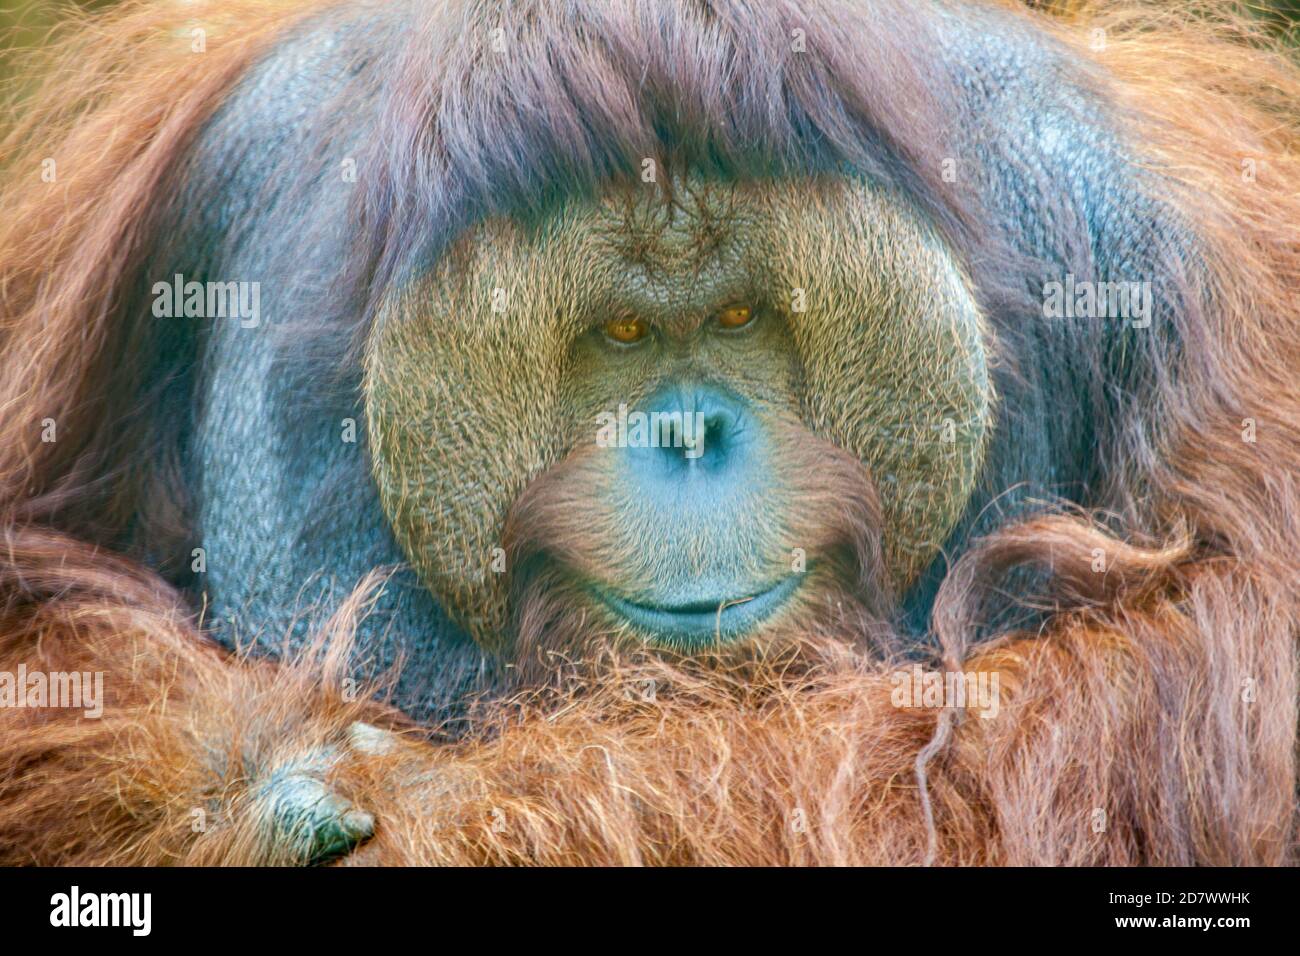 Orangutan, Pongo pygmaeus, adult male. Stock Photo